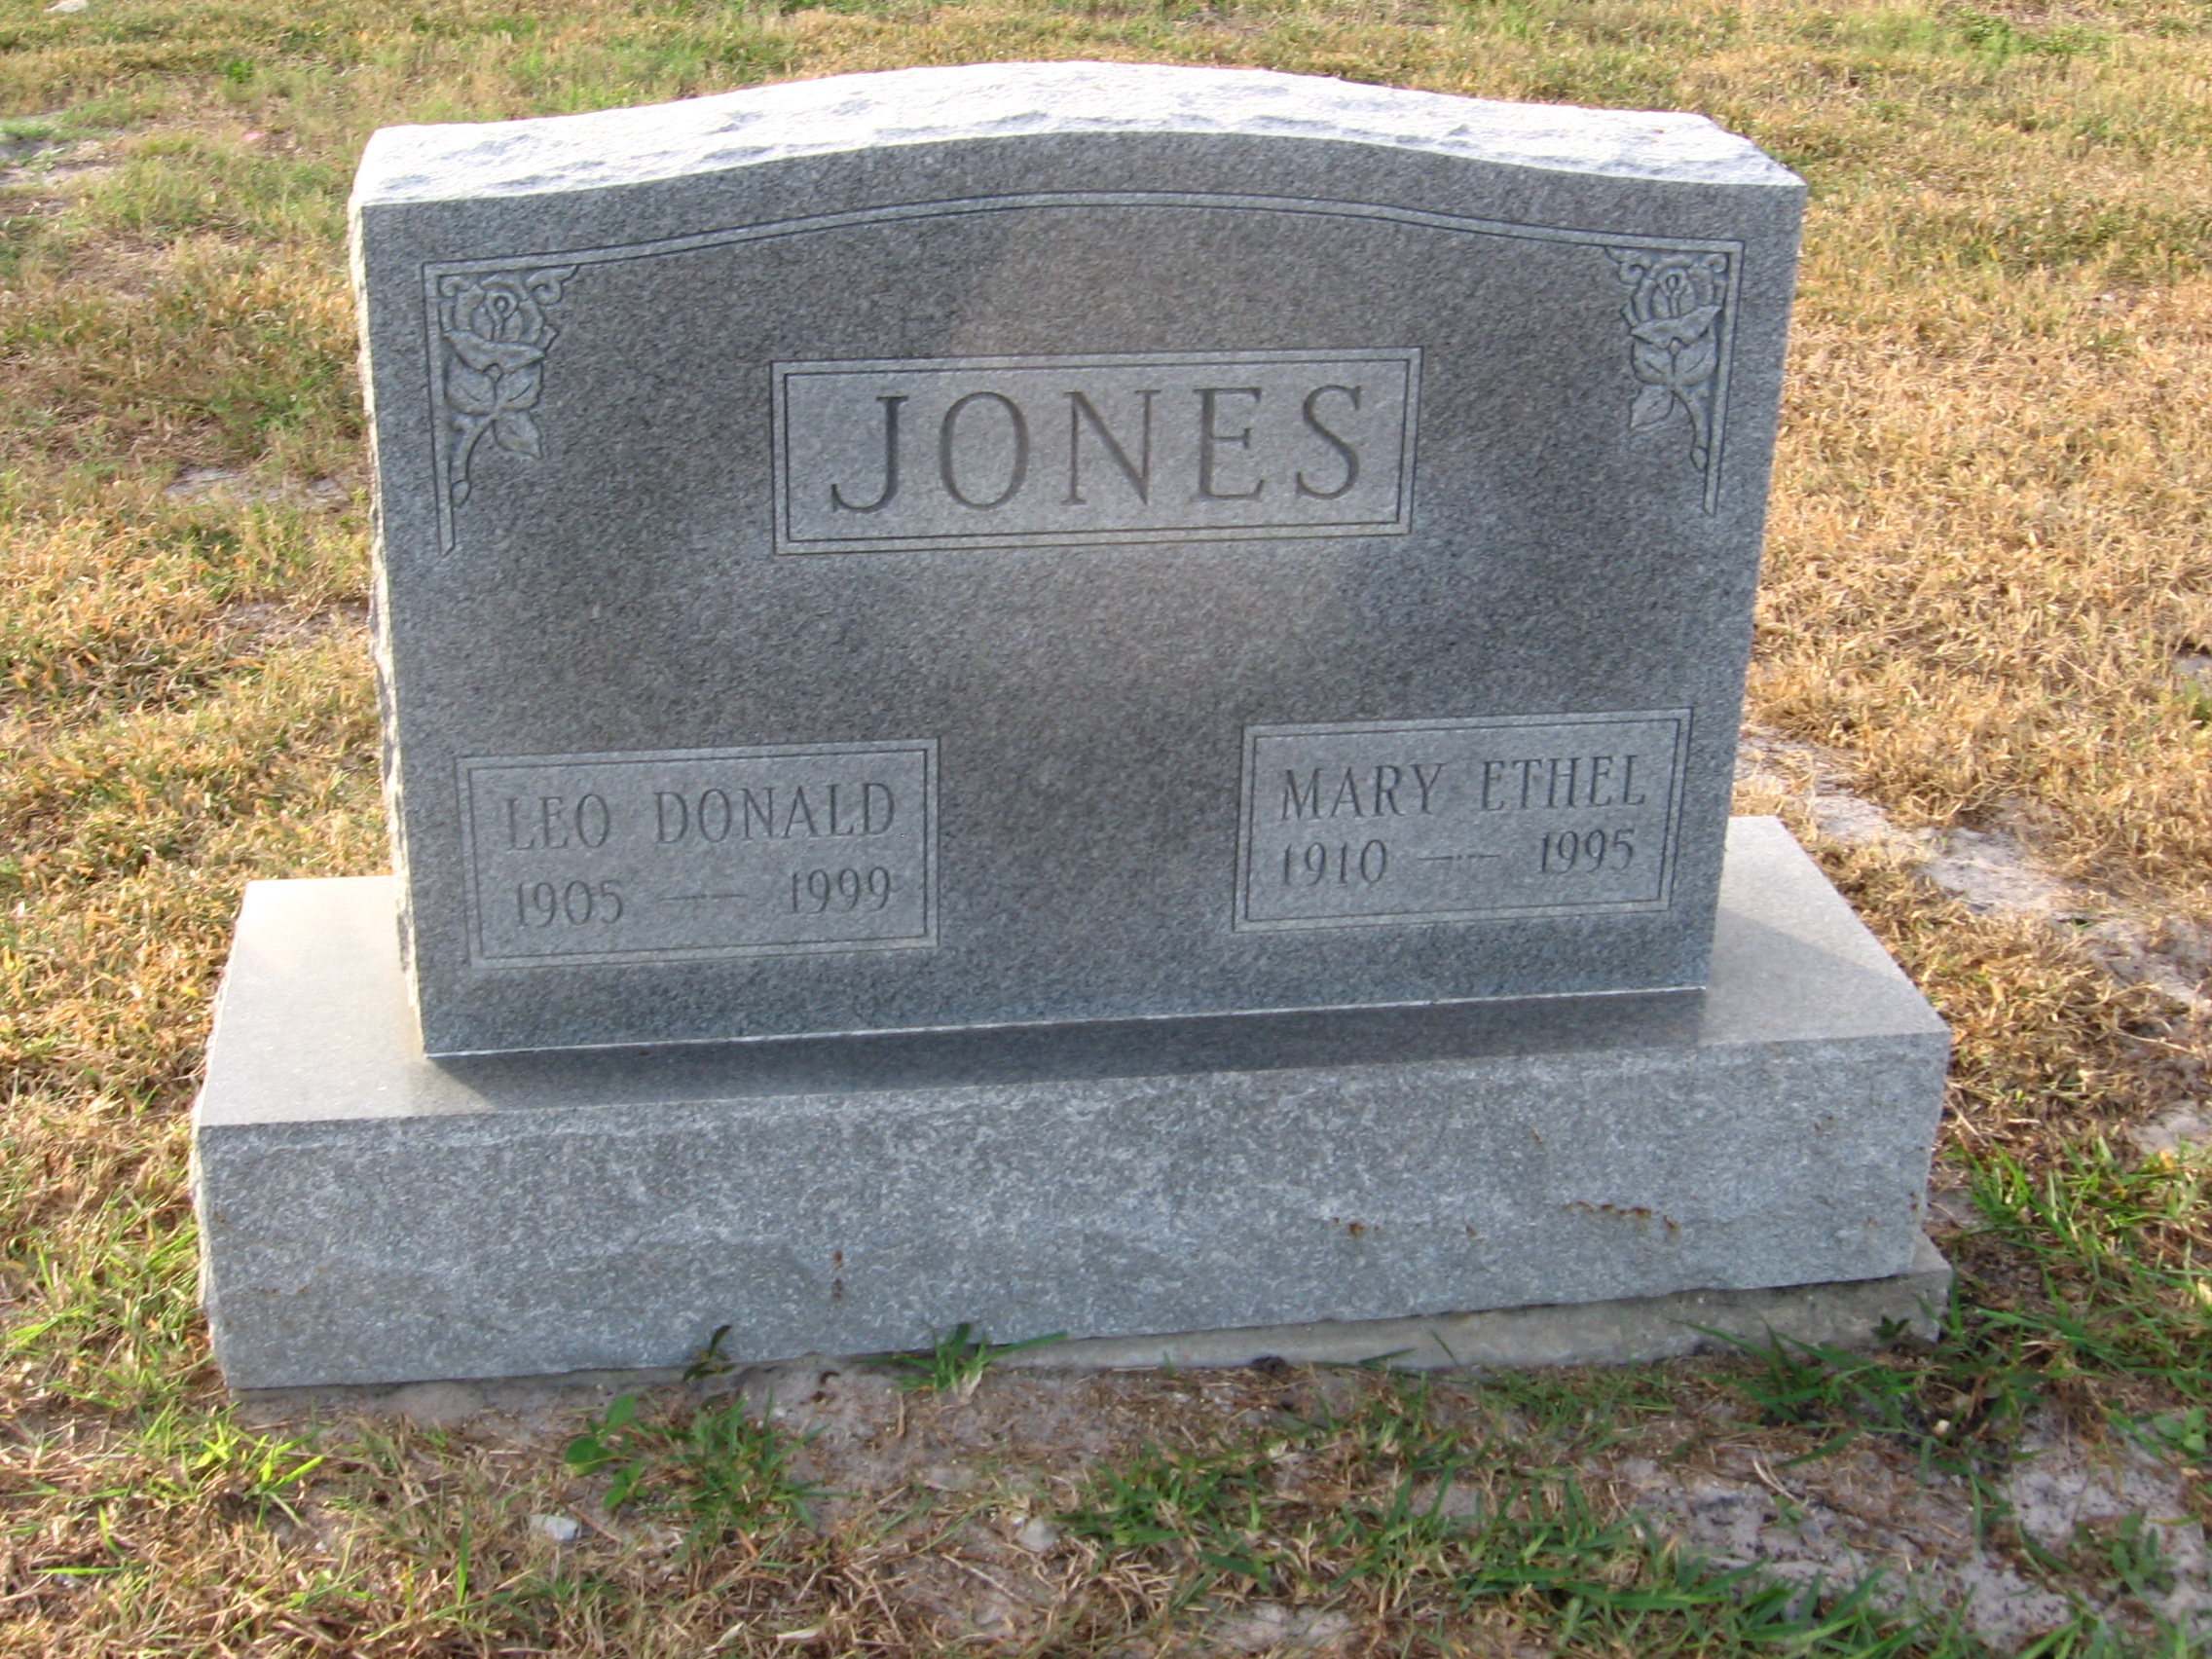 Leo Donald Jones